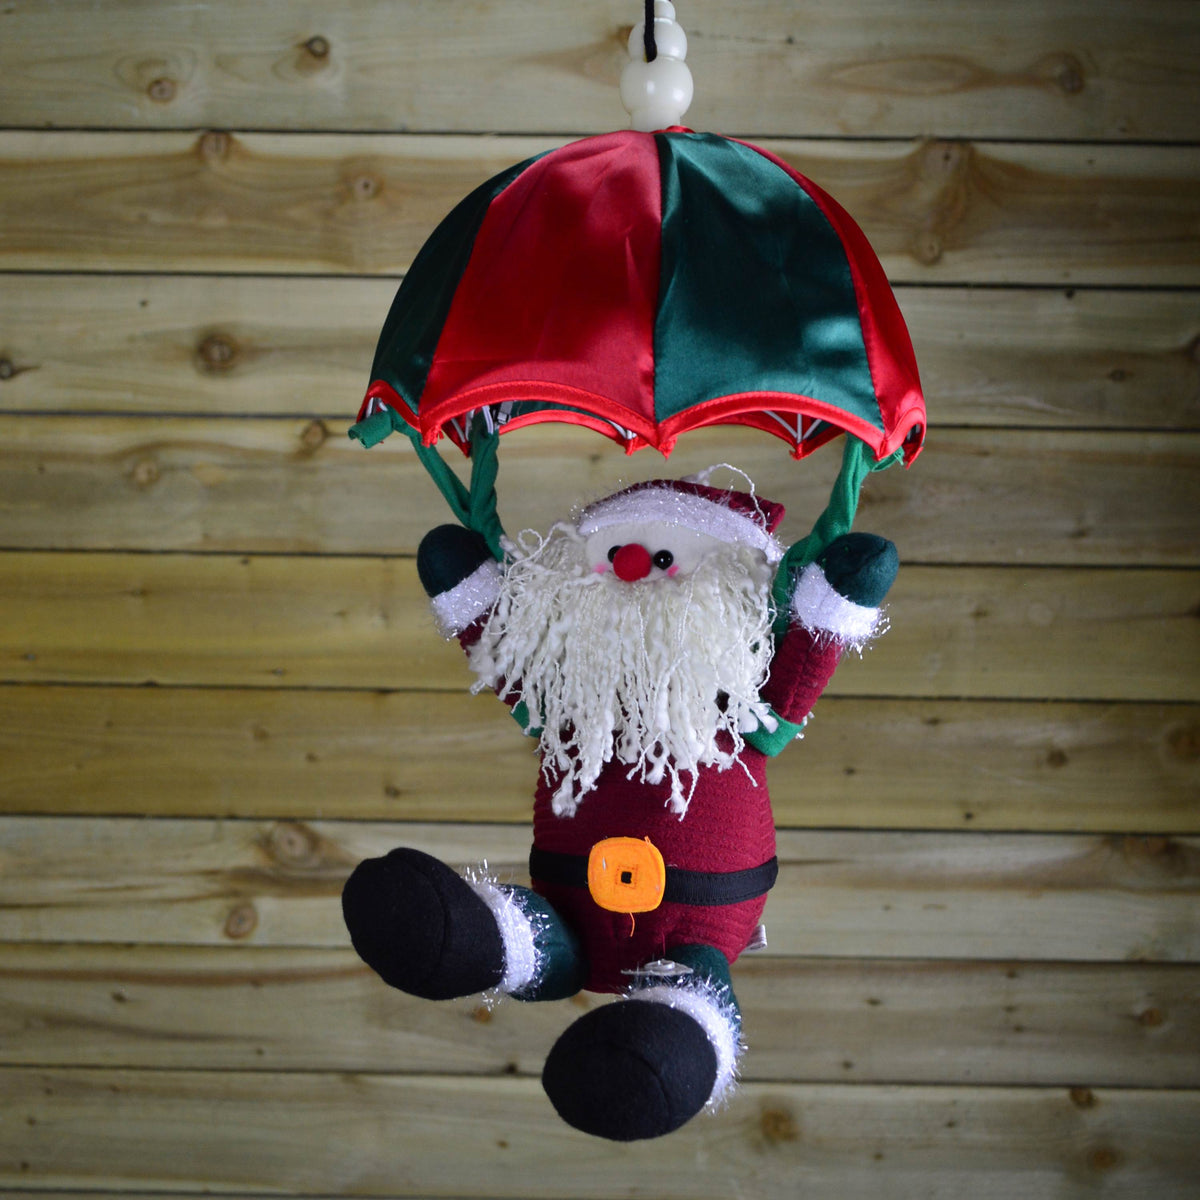 45cm Premier Animated & Musical Parachuting Christmas Character - Santa